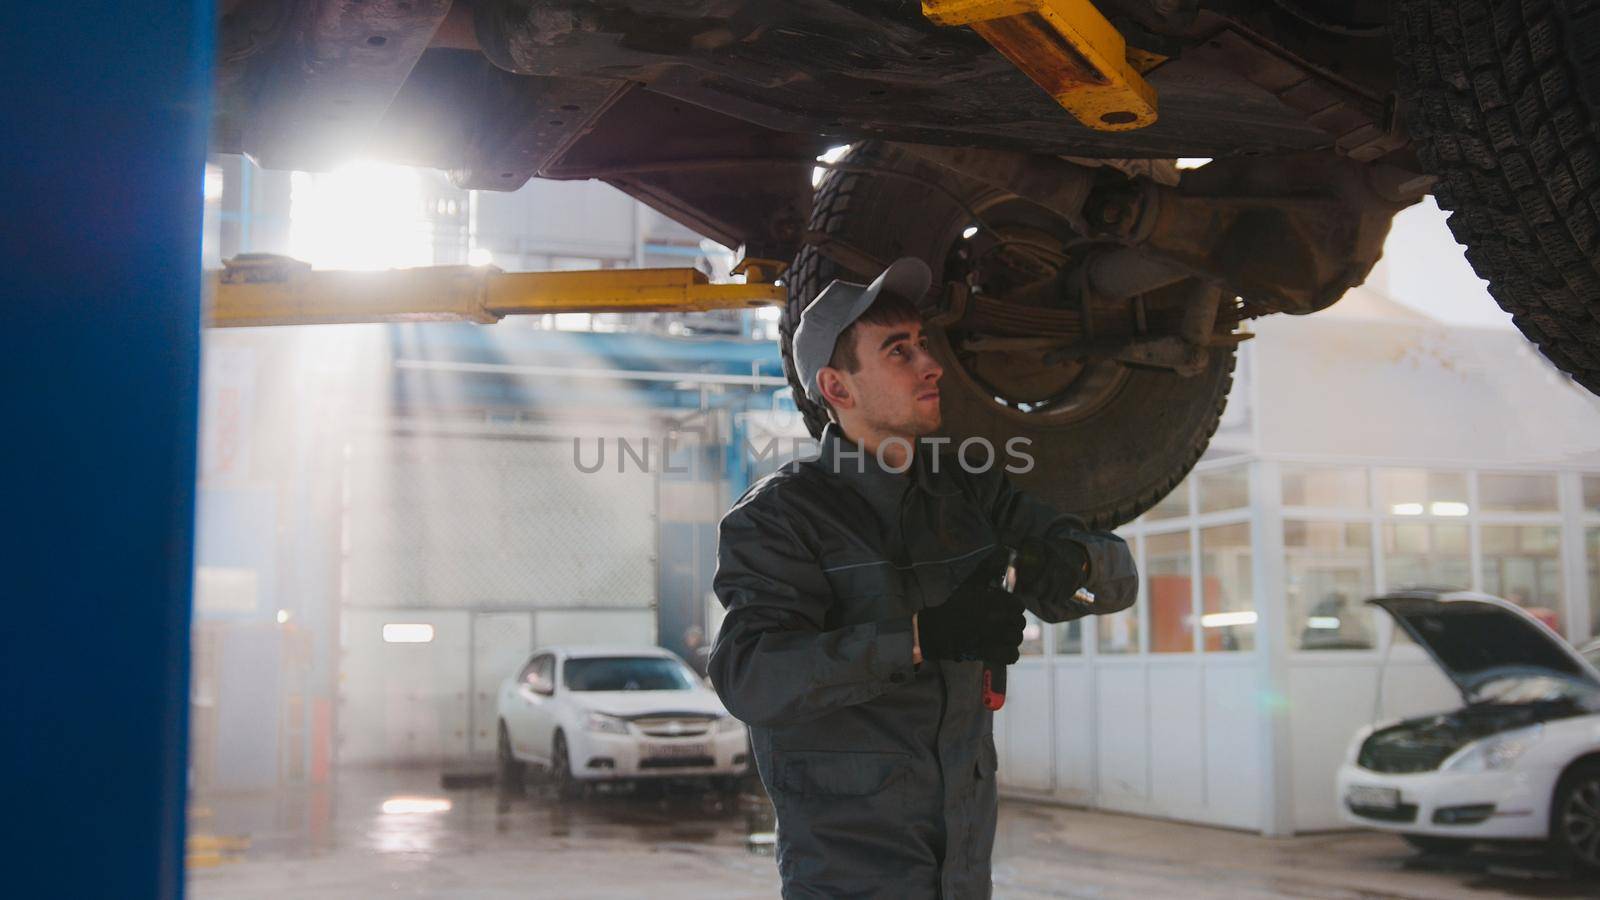 Garage automobile service - a mechanic under bottom of car checks the wheel, close up, horizontal